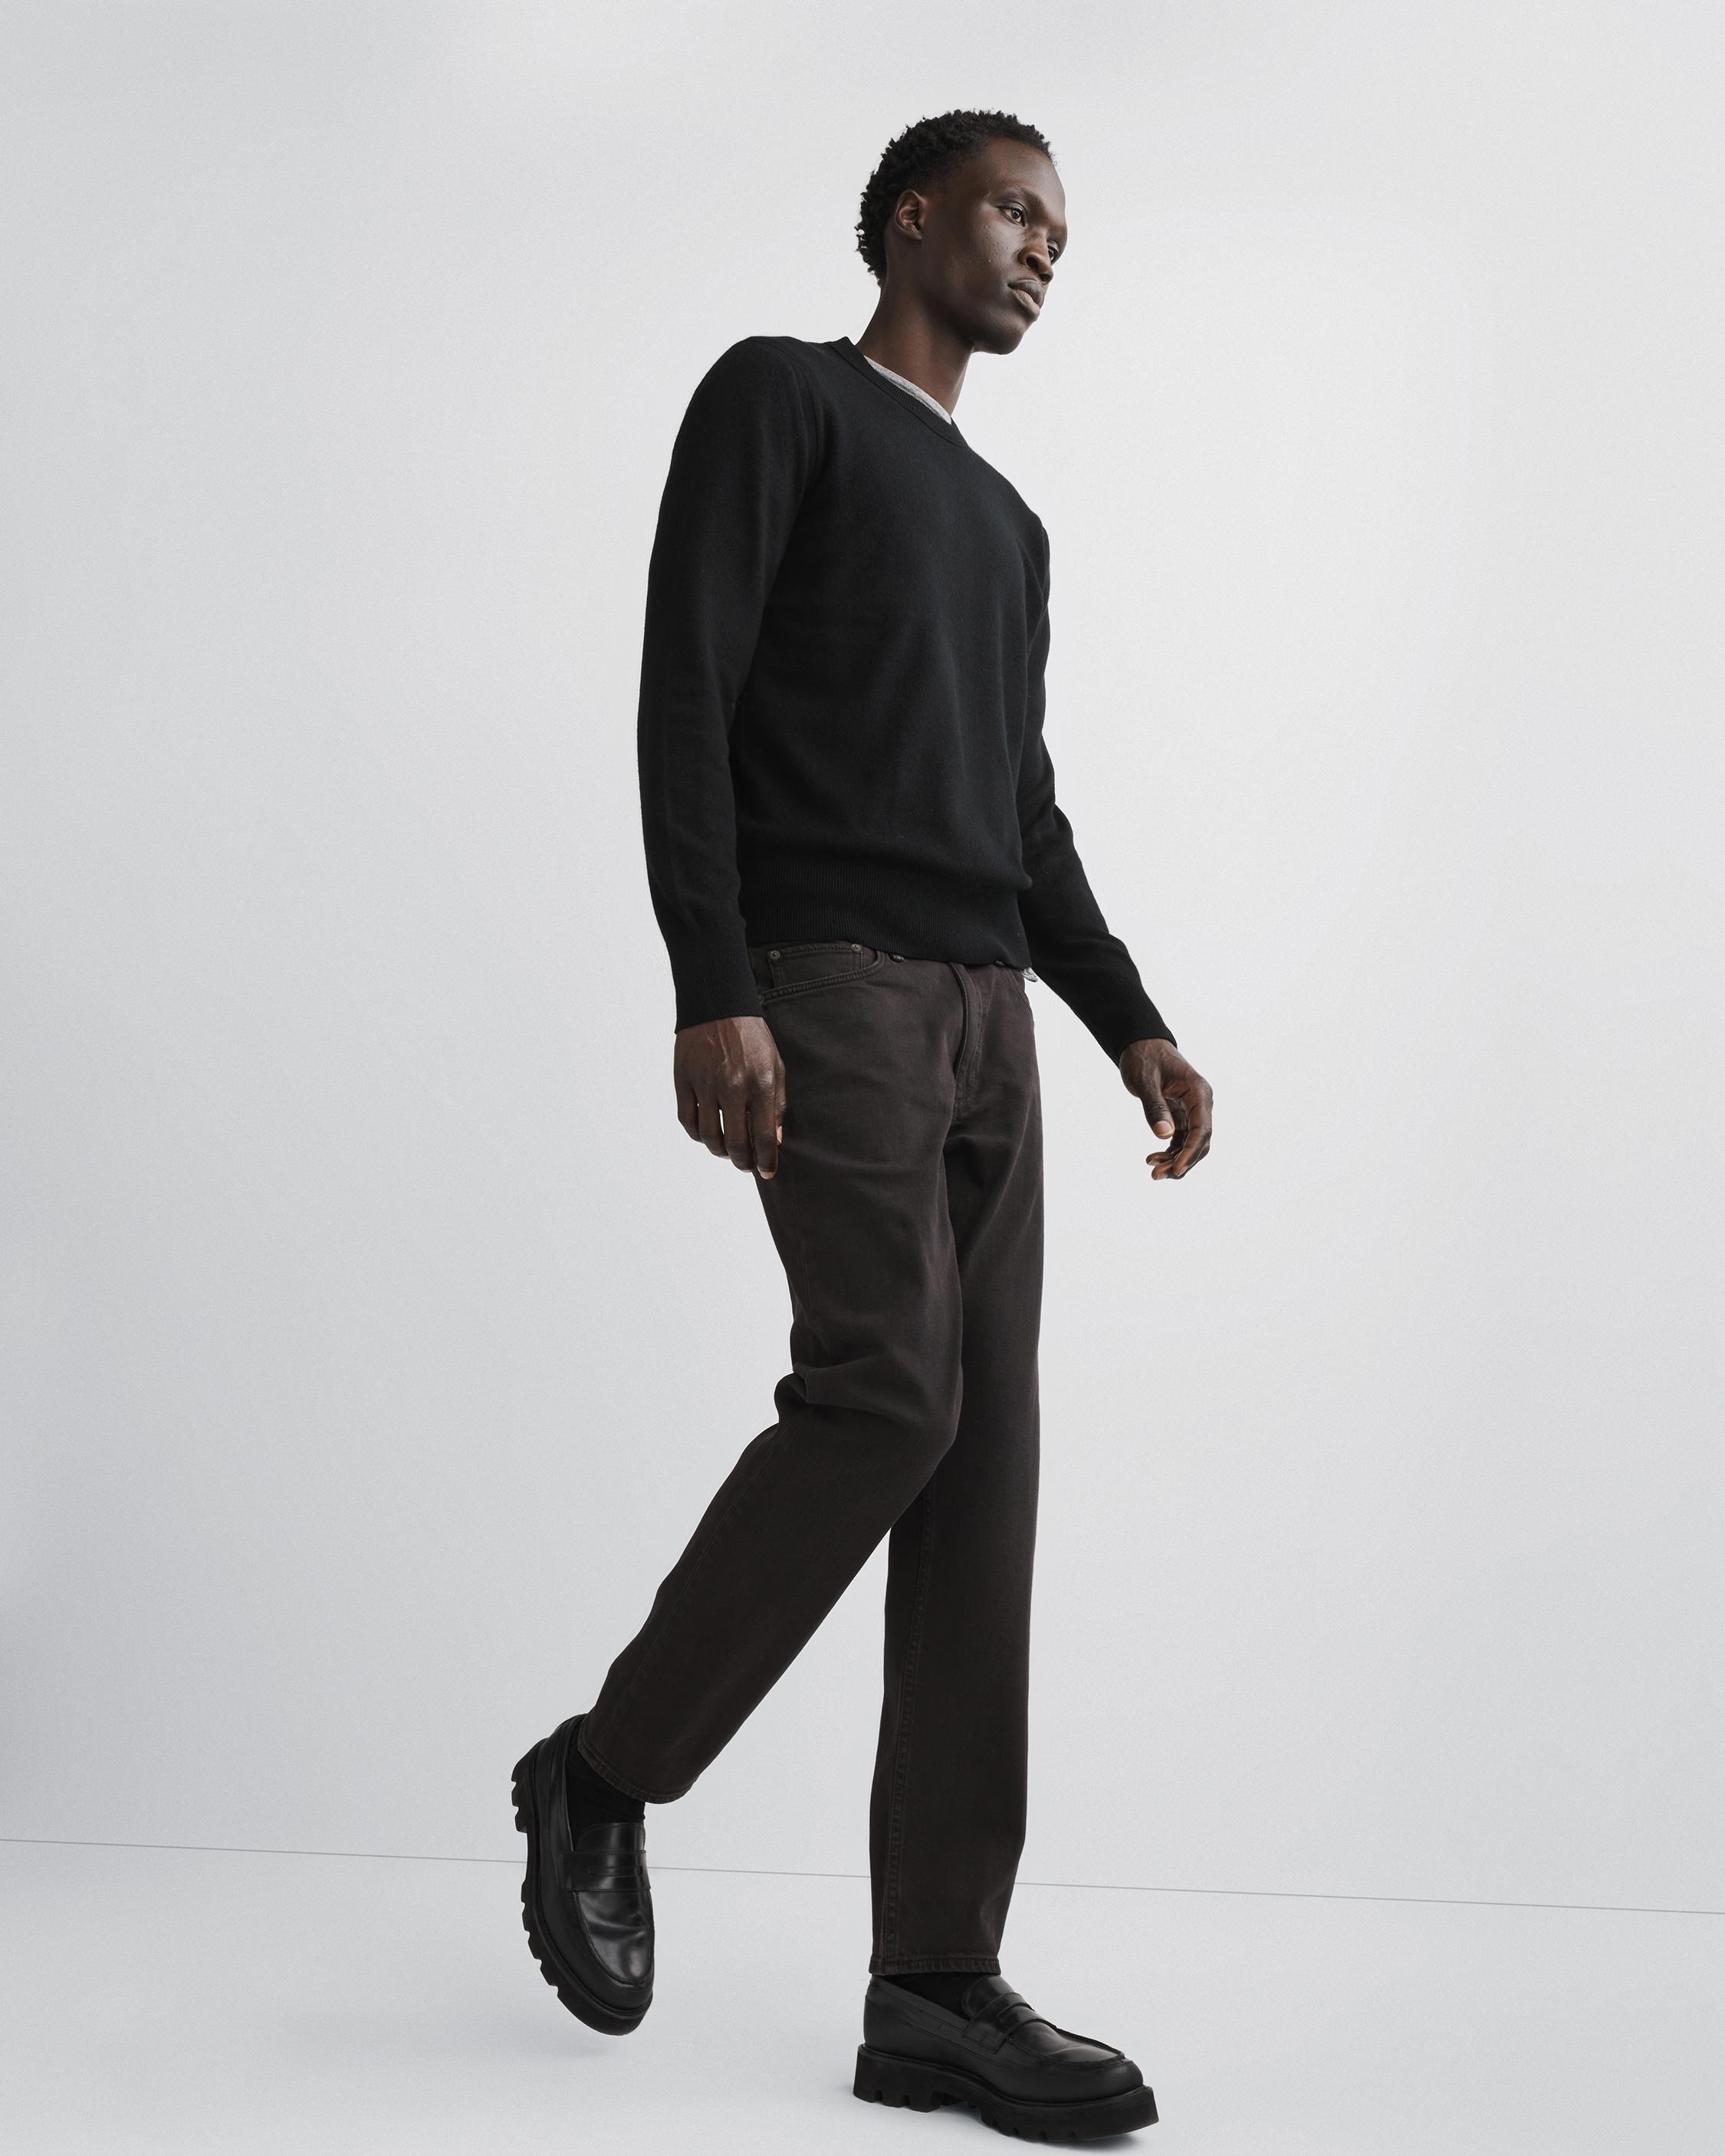 Fit 2 - Black: Slim Fit Black Authentic Stretch Jean